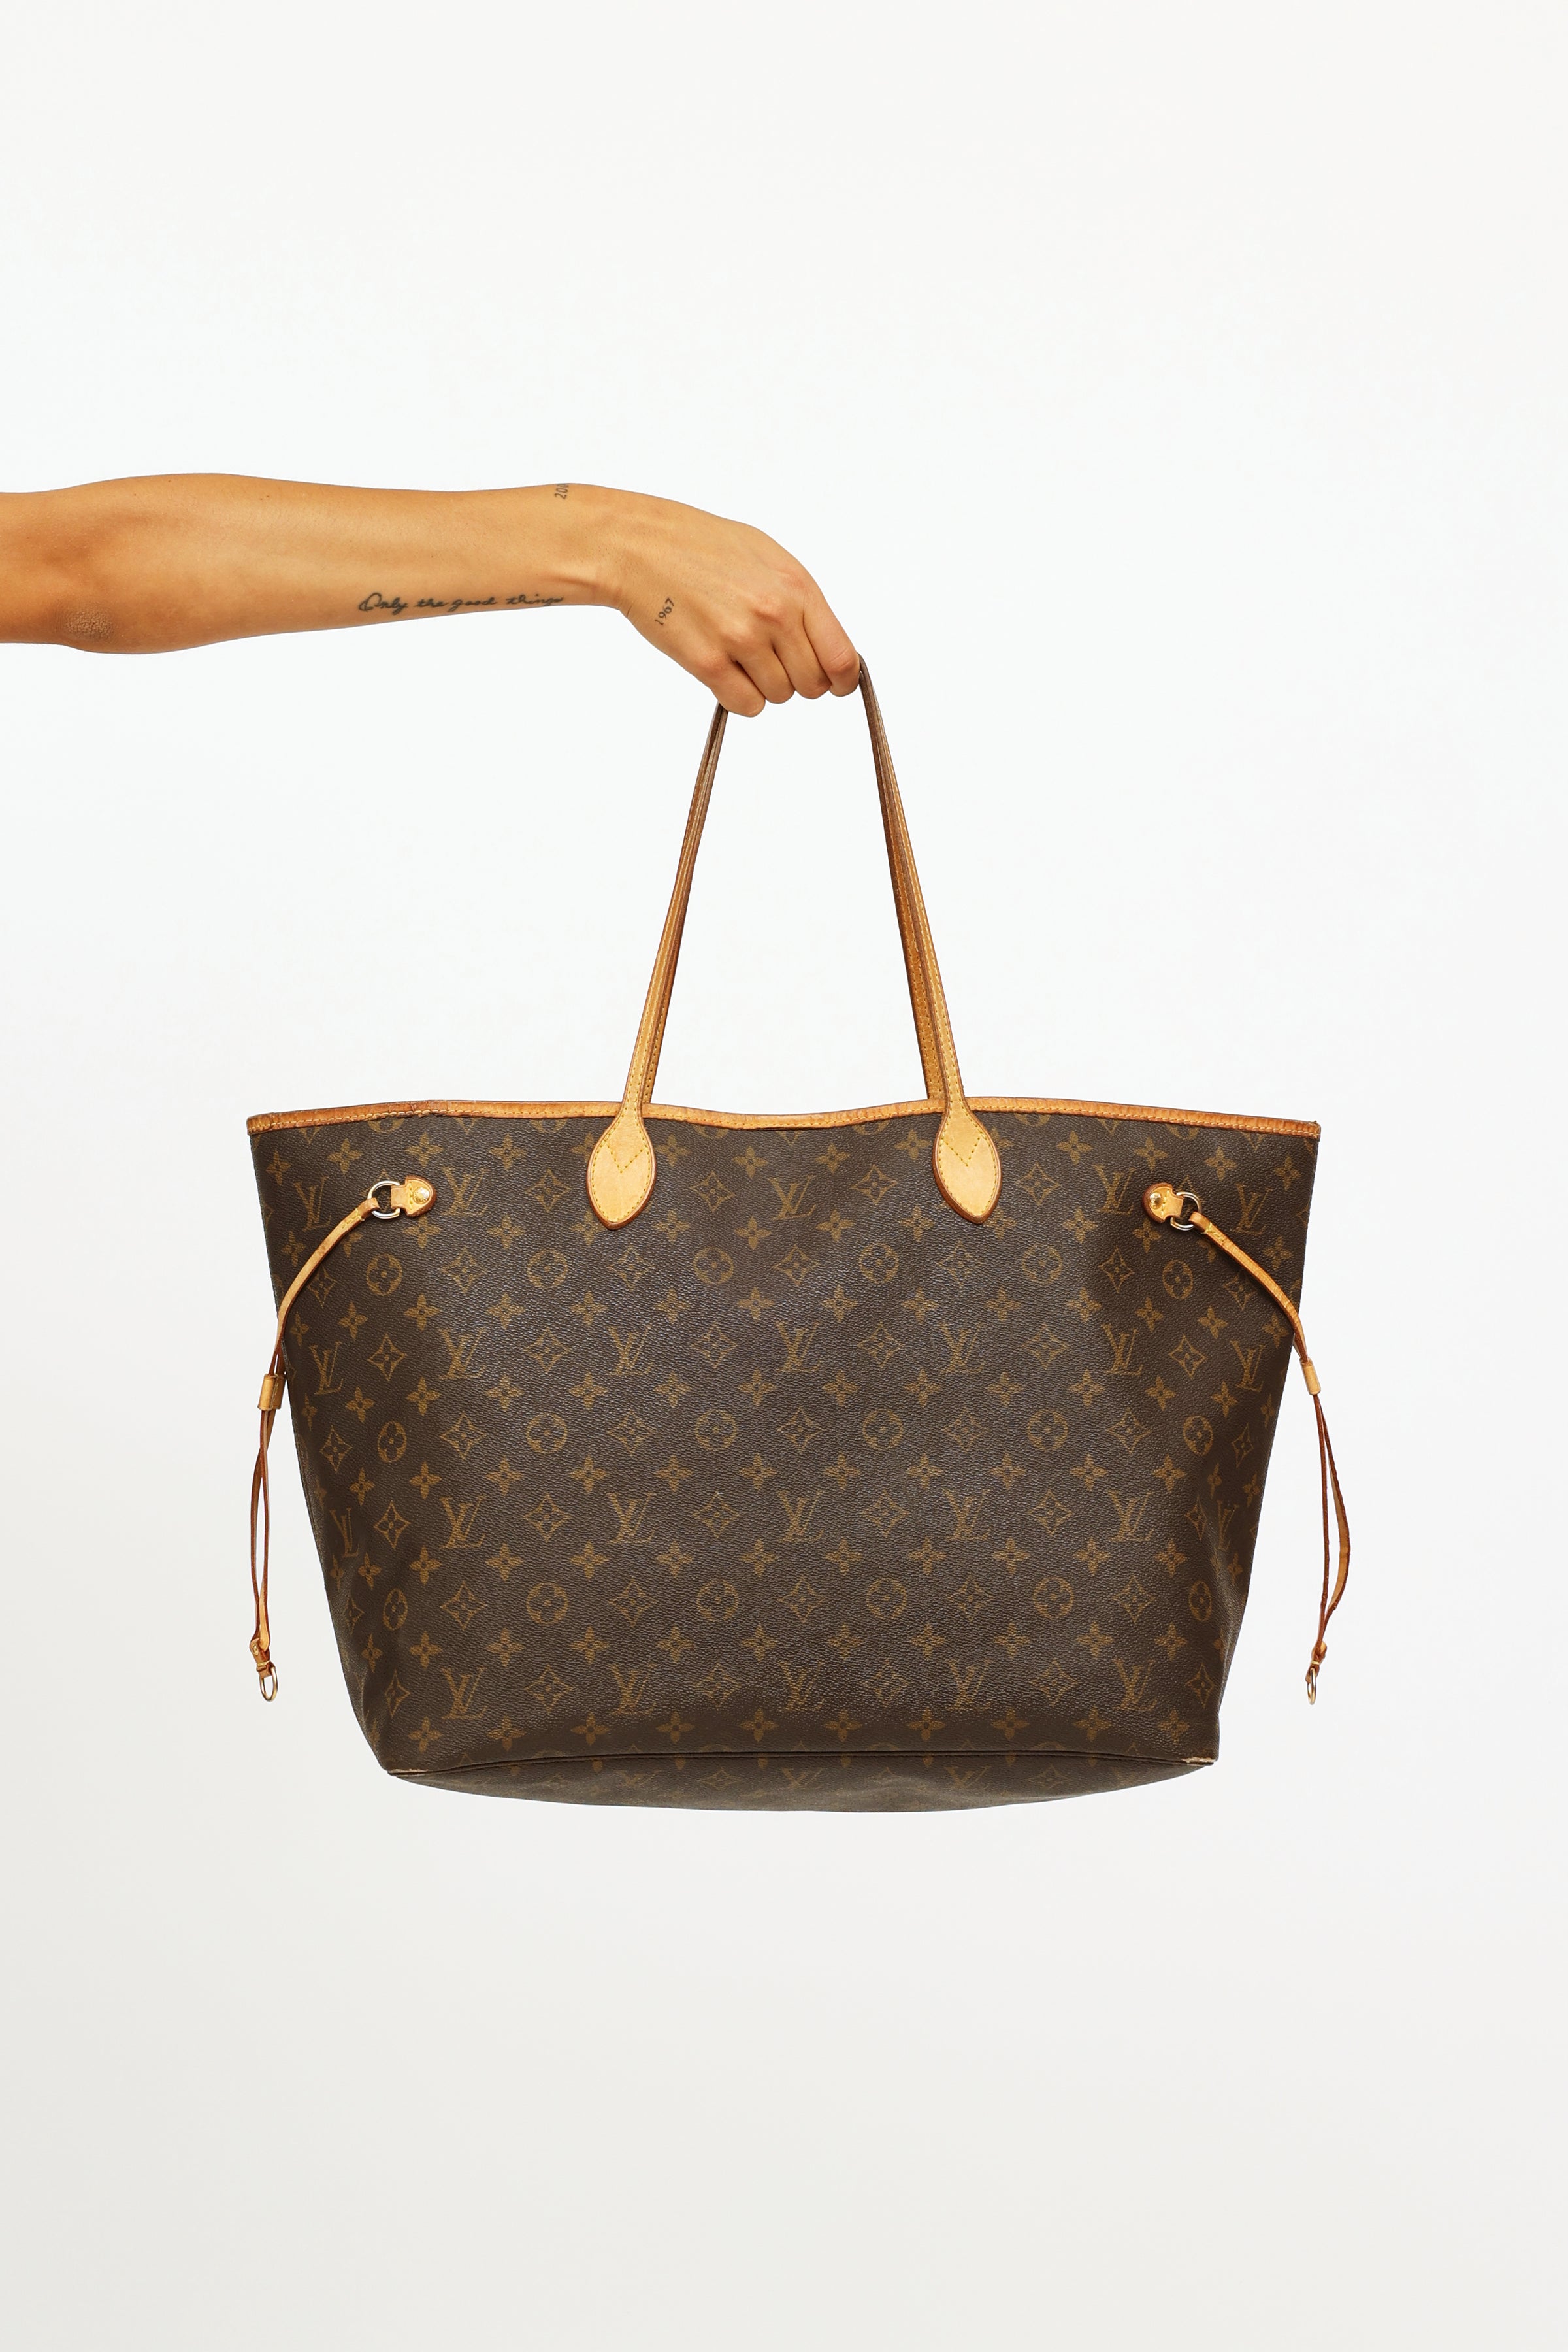 Louis Vuitton Neverfull MM Monogram Bag (HEAVY WEAR) for Sale in